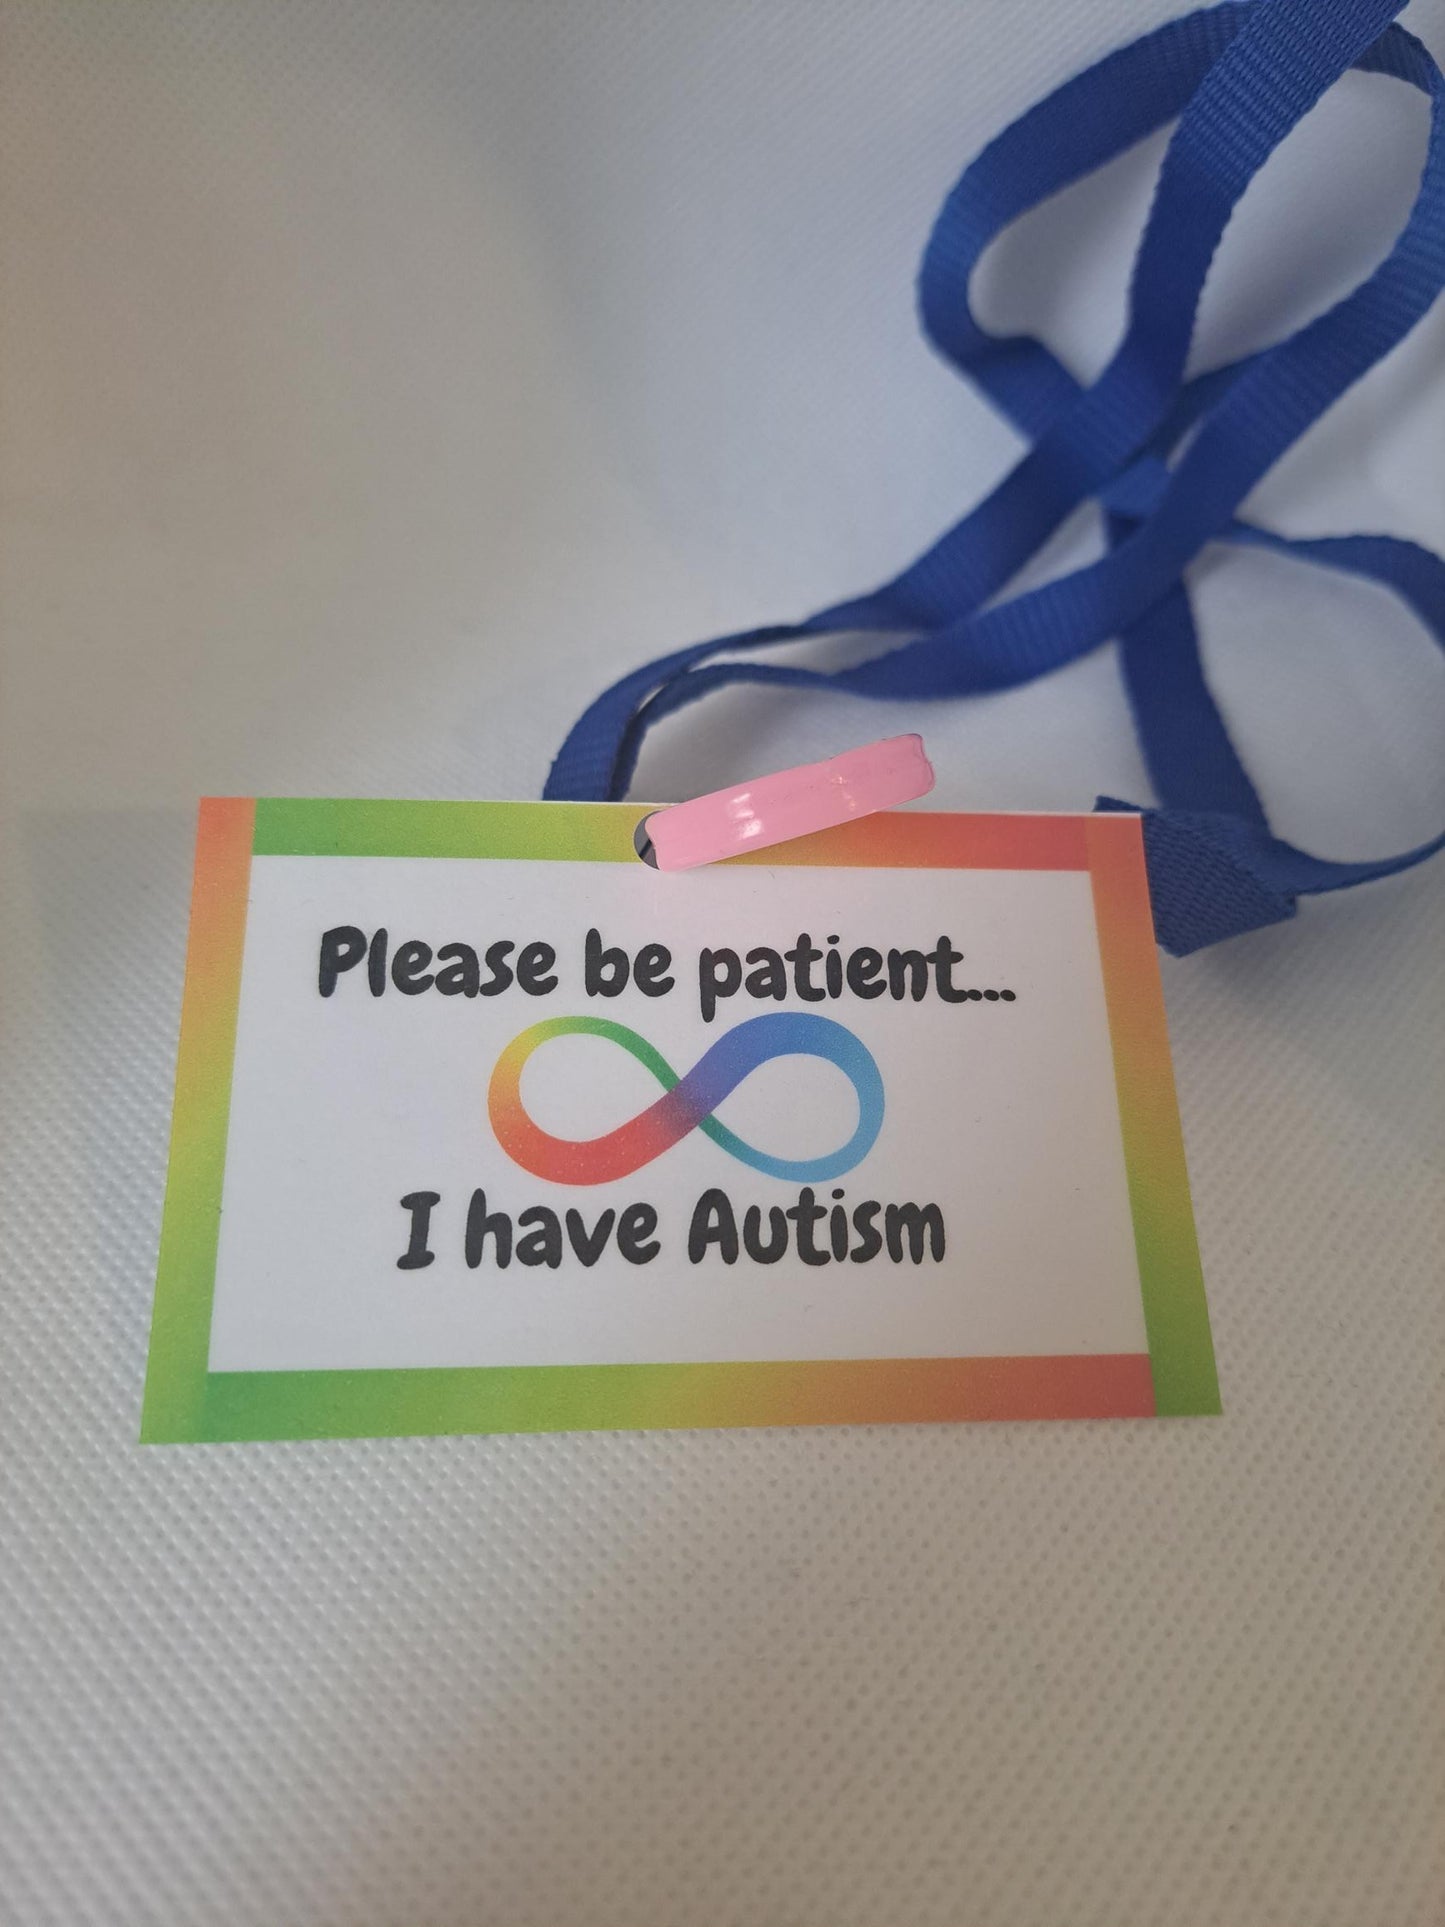 I have Autism - lanyard